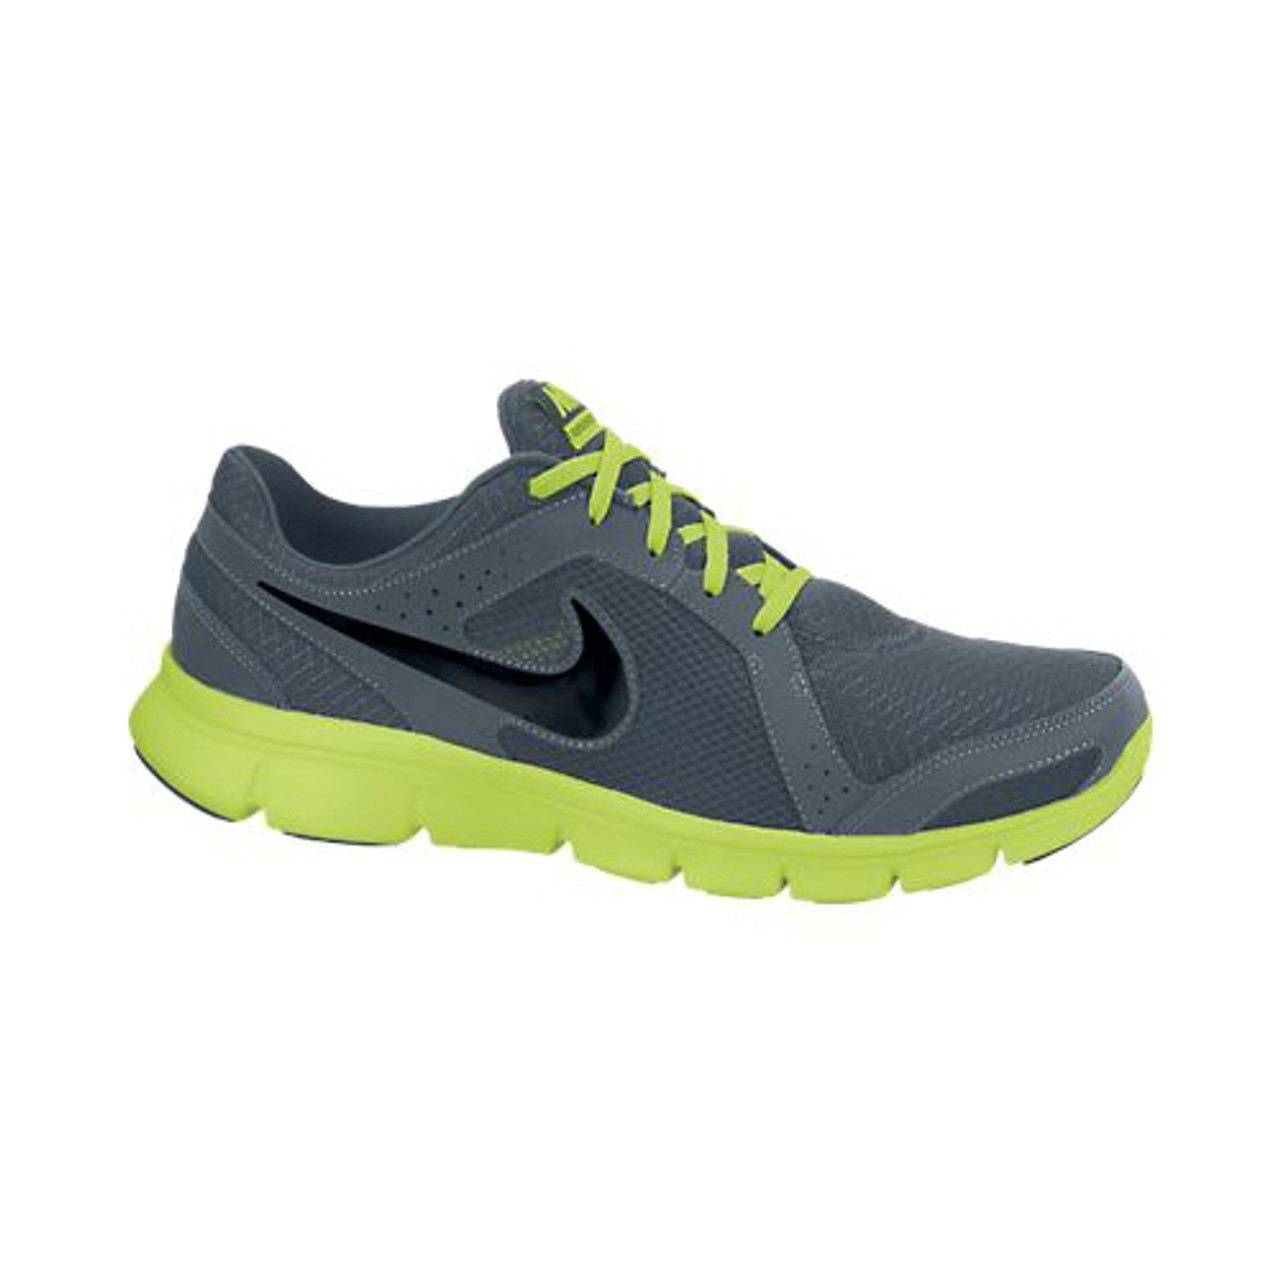 Nike Flex Experience Run 2 Slate/Volt Mens Running Shoes - Armory | Discount Nike Men's Athletic & More - Shoolu.com | Shoolu.com